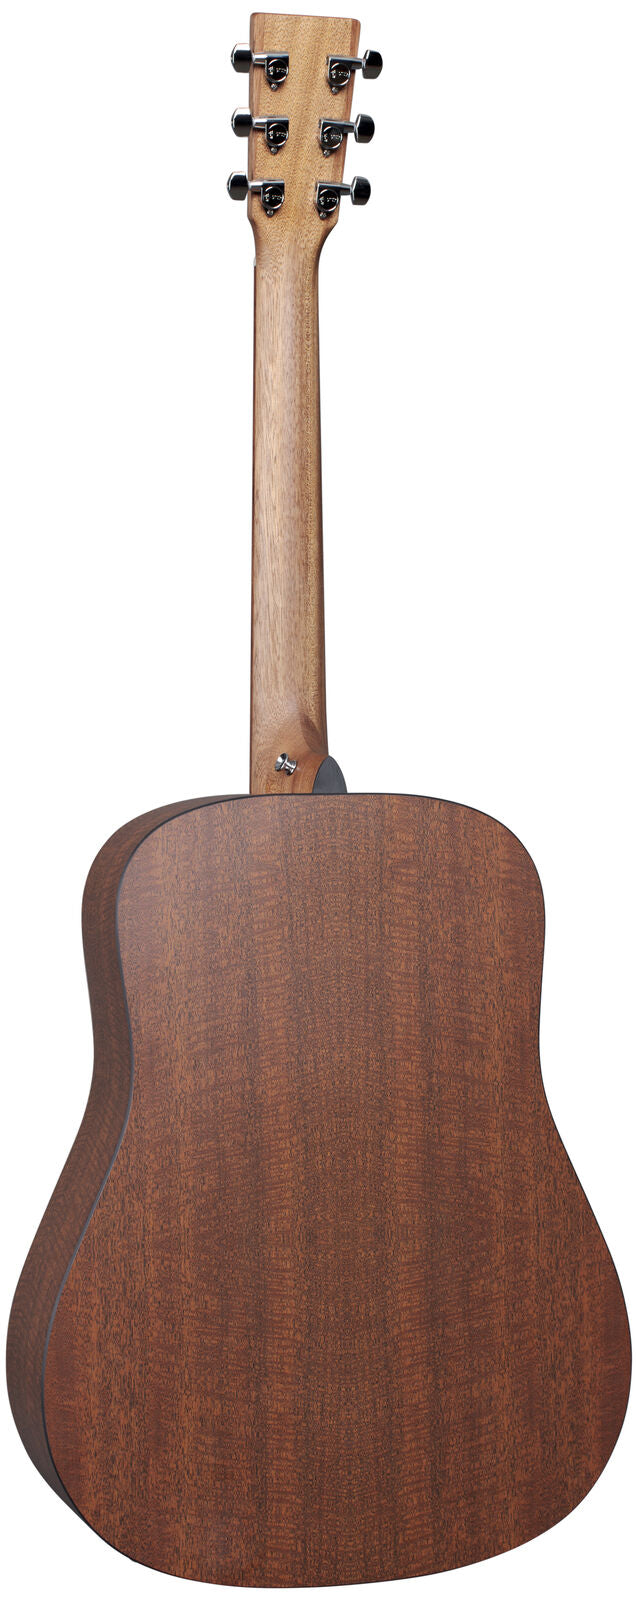 Martin D-X2E-2 Mahogany HPL Guitar w/Gig Bag